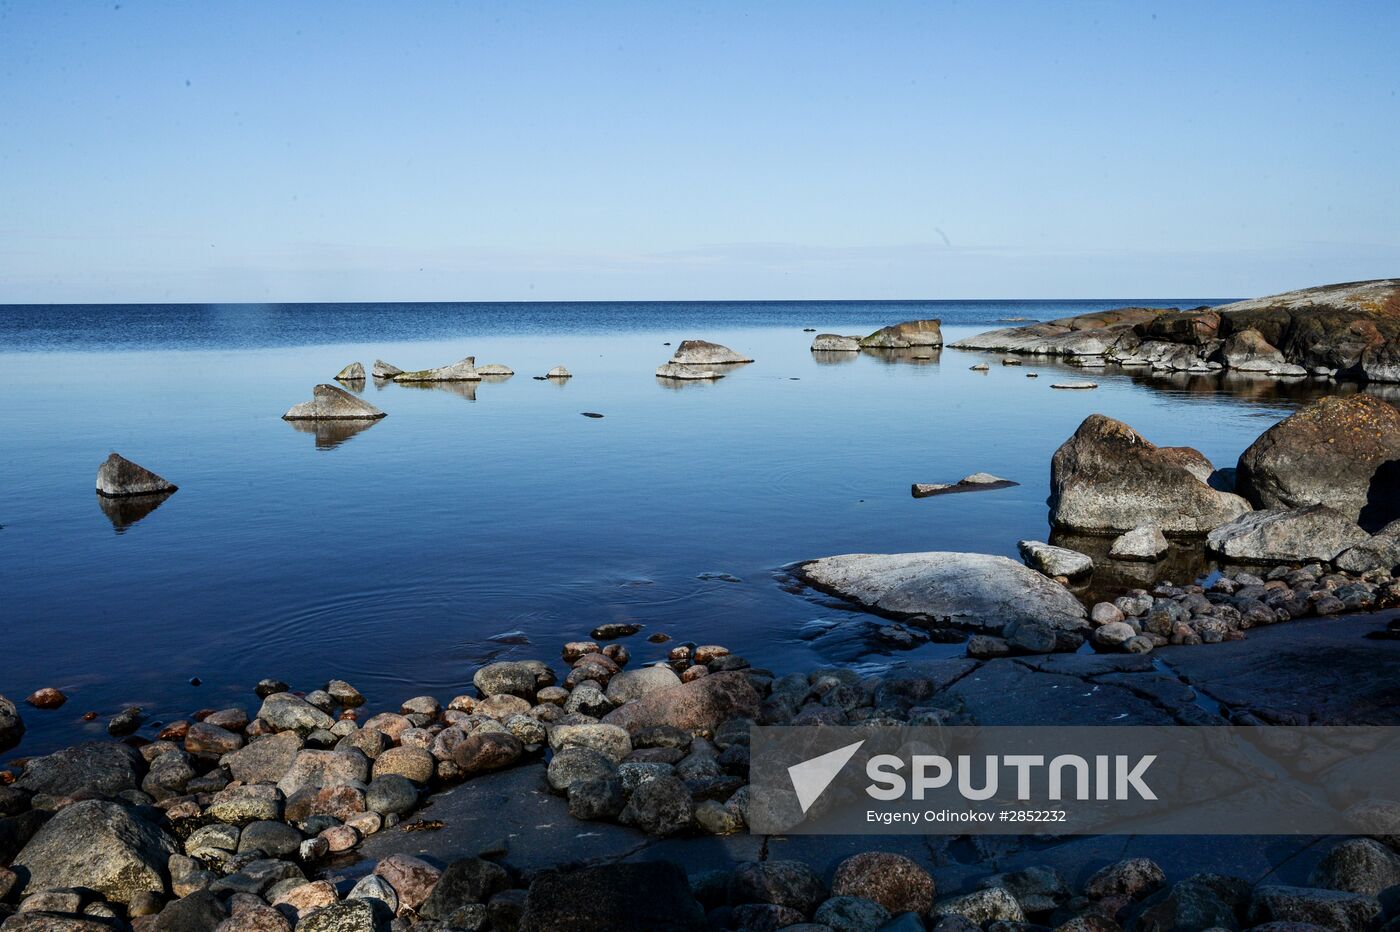 Hogland island in Gulf of Finland